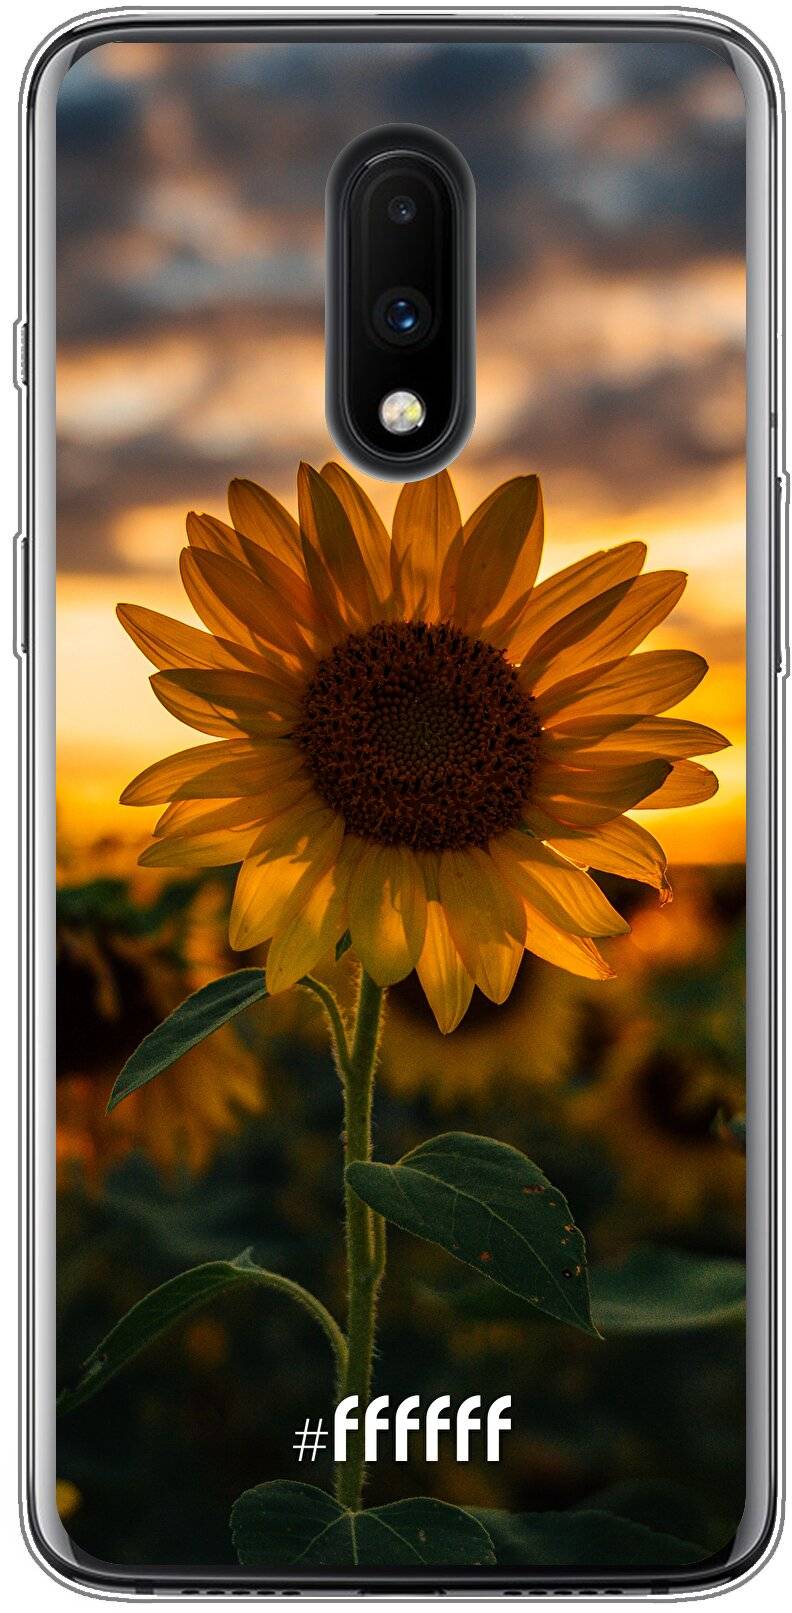 Sunset Sunflower 7